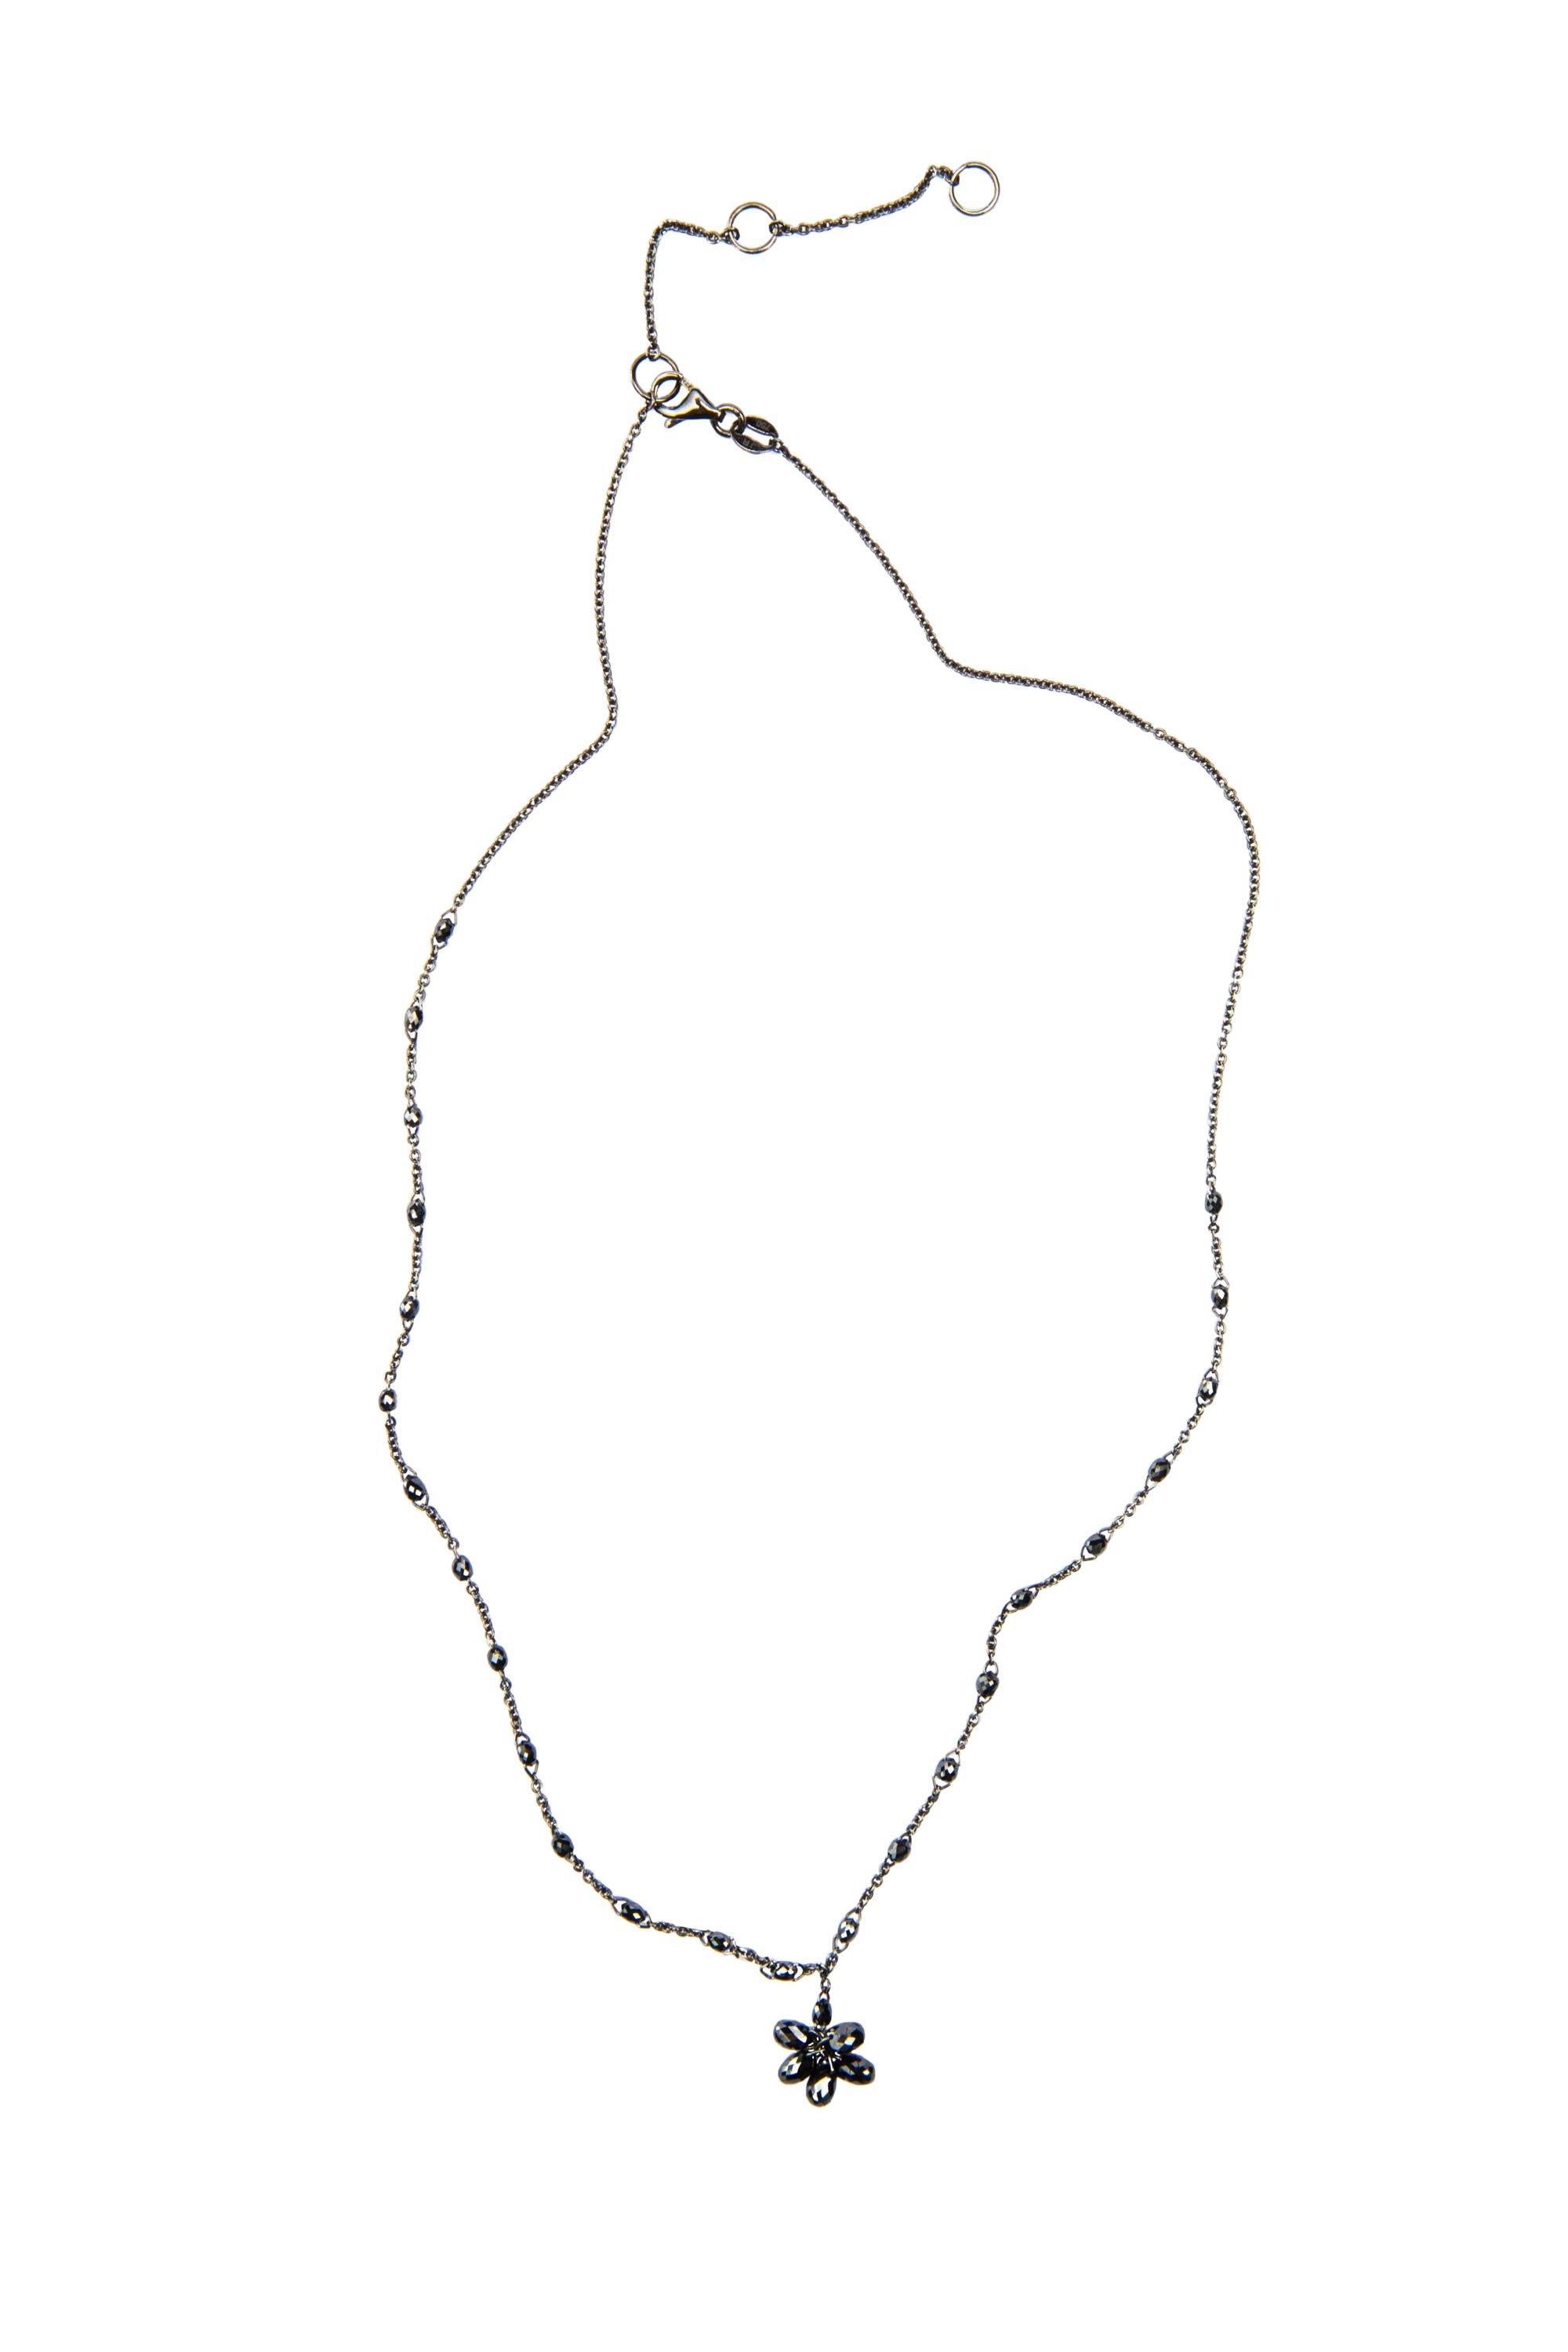 Round Cut Alex Jona Briolette-Cut Black Diamond 18 Karat White Gold Link Chain Necklace